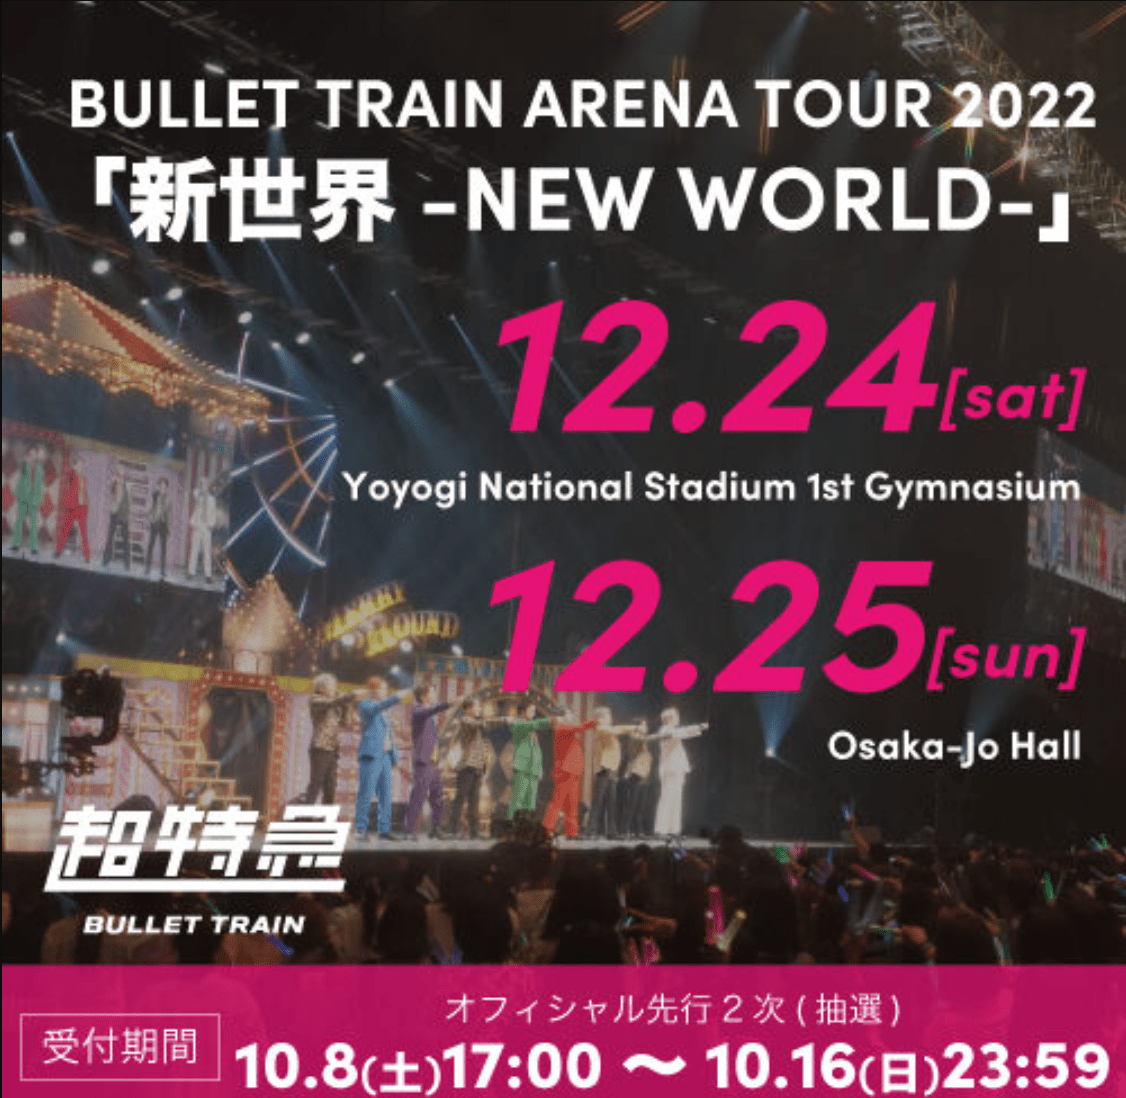 Bullet Train Arena Tour 2022